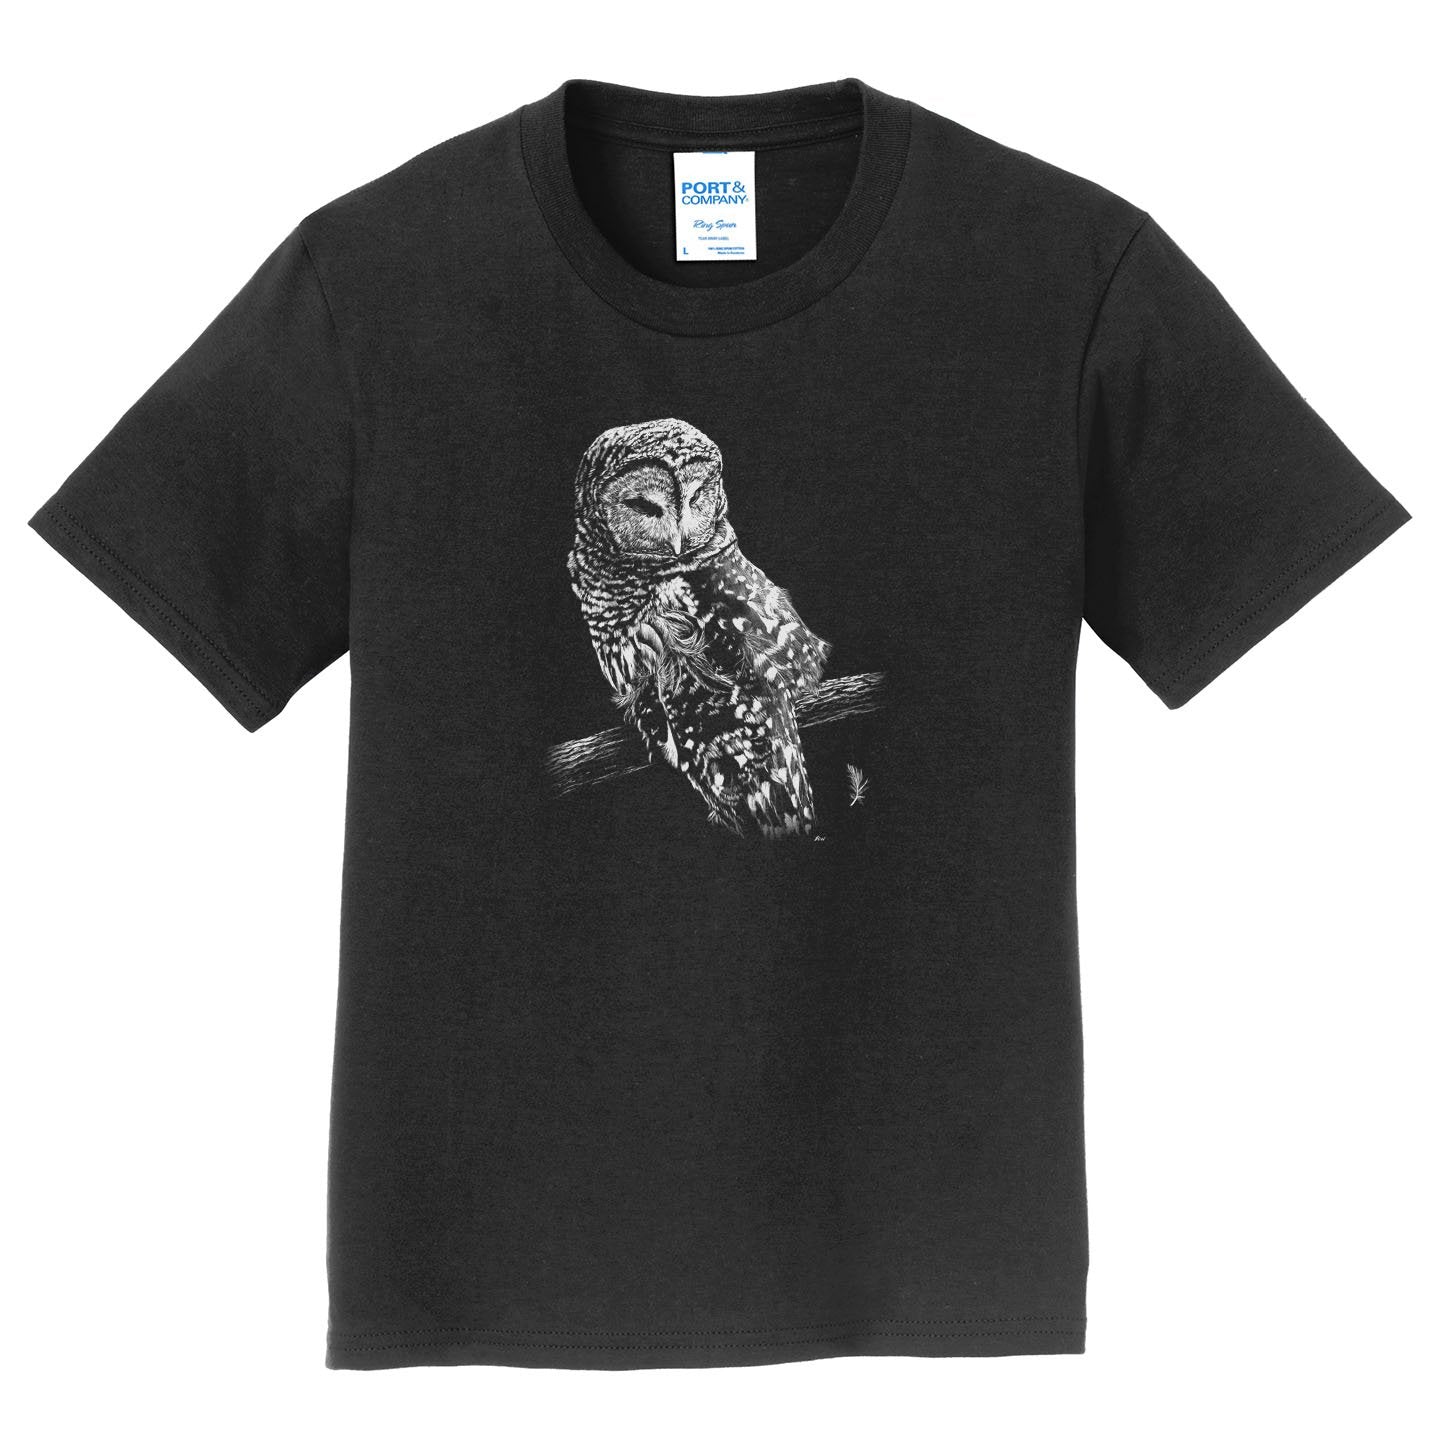 Barred Owl on Black - Kids' Unisex T-Shirt